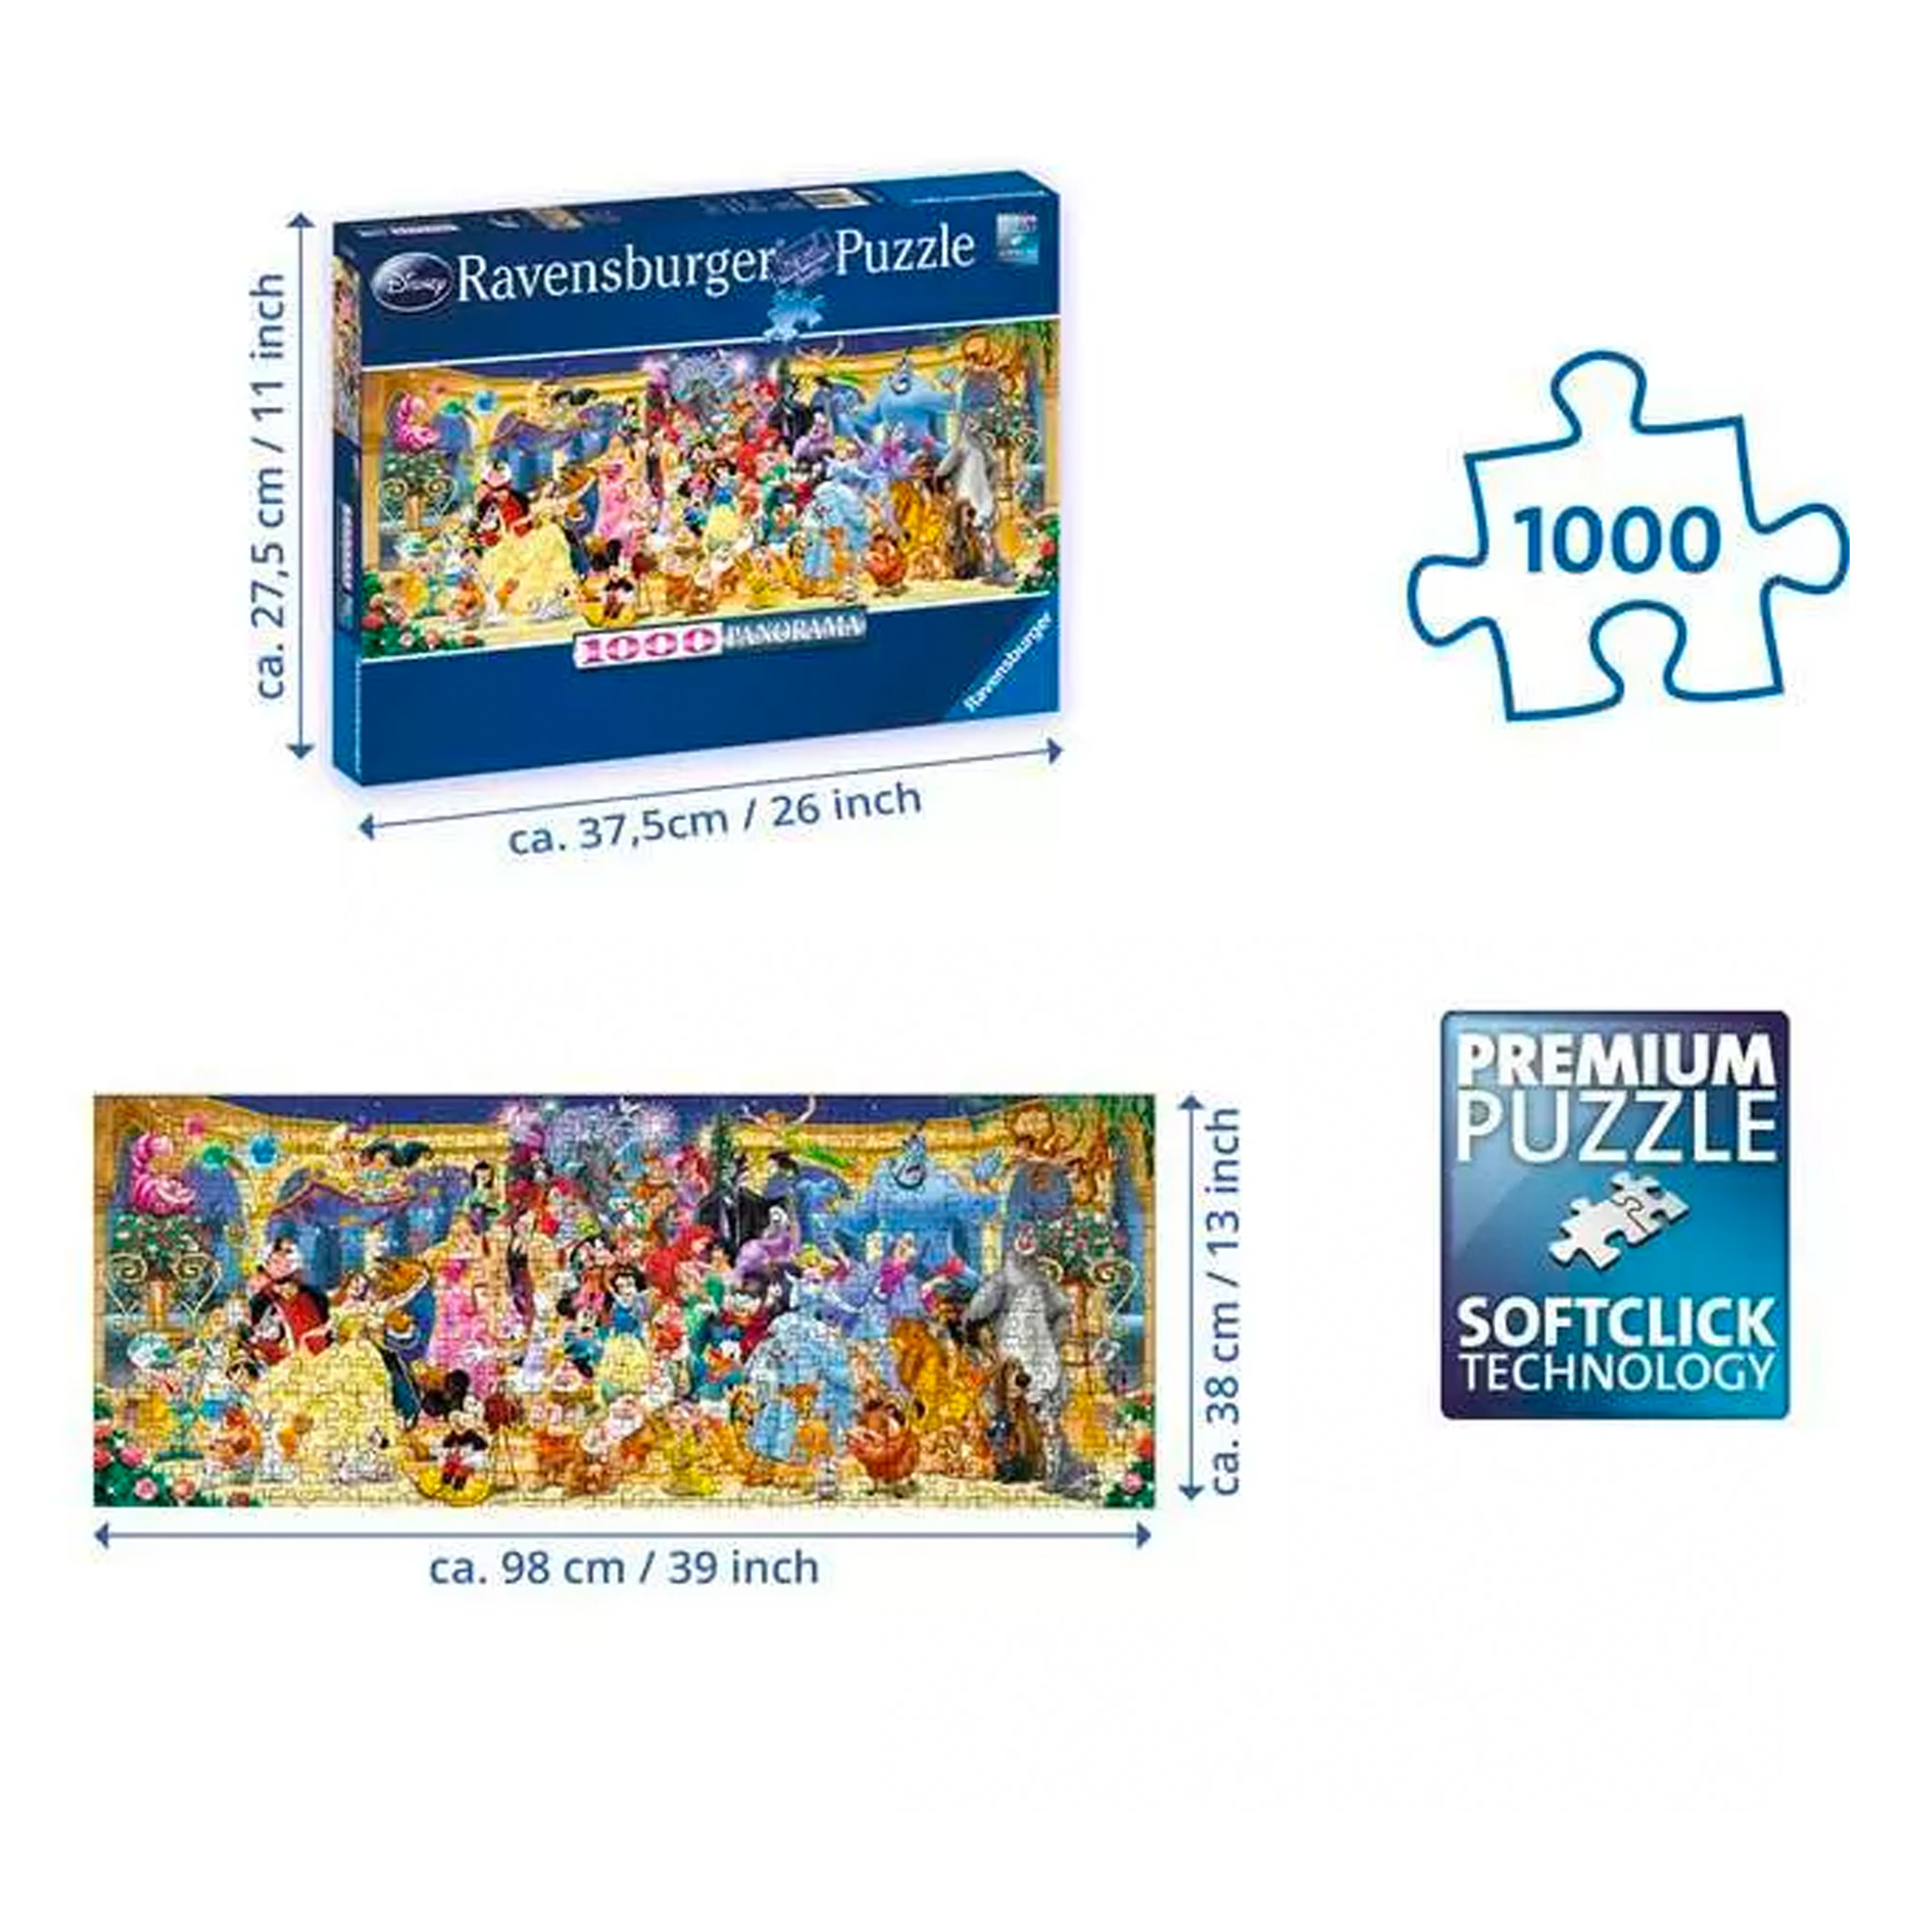 Disney Gruppenfoto Panorama Puzzle (1000 Teile)